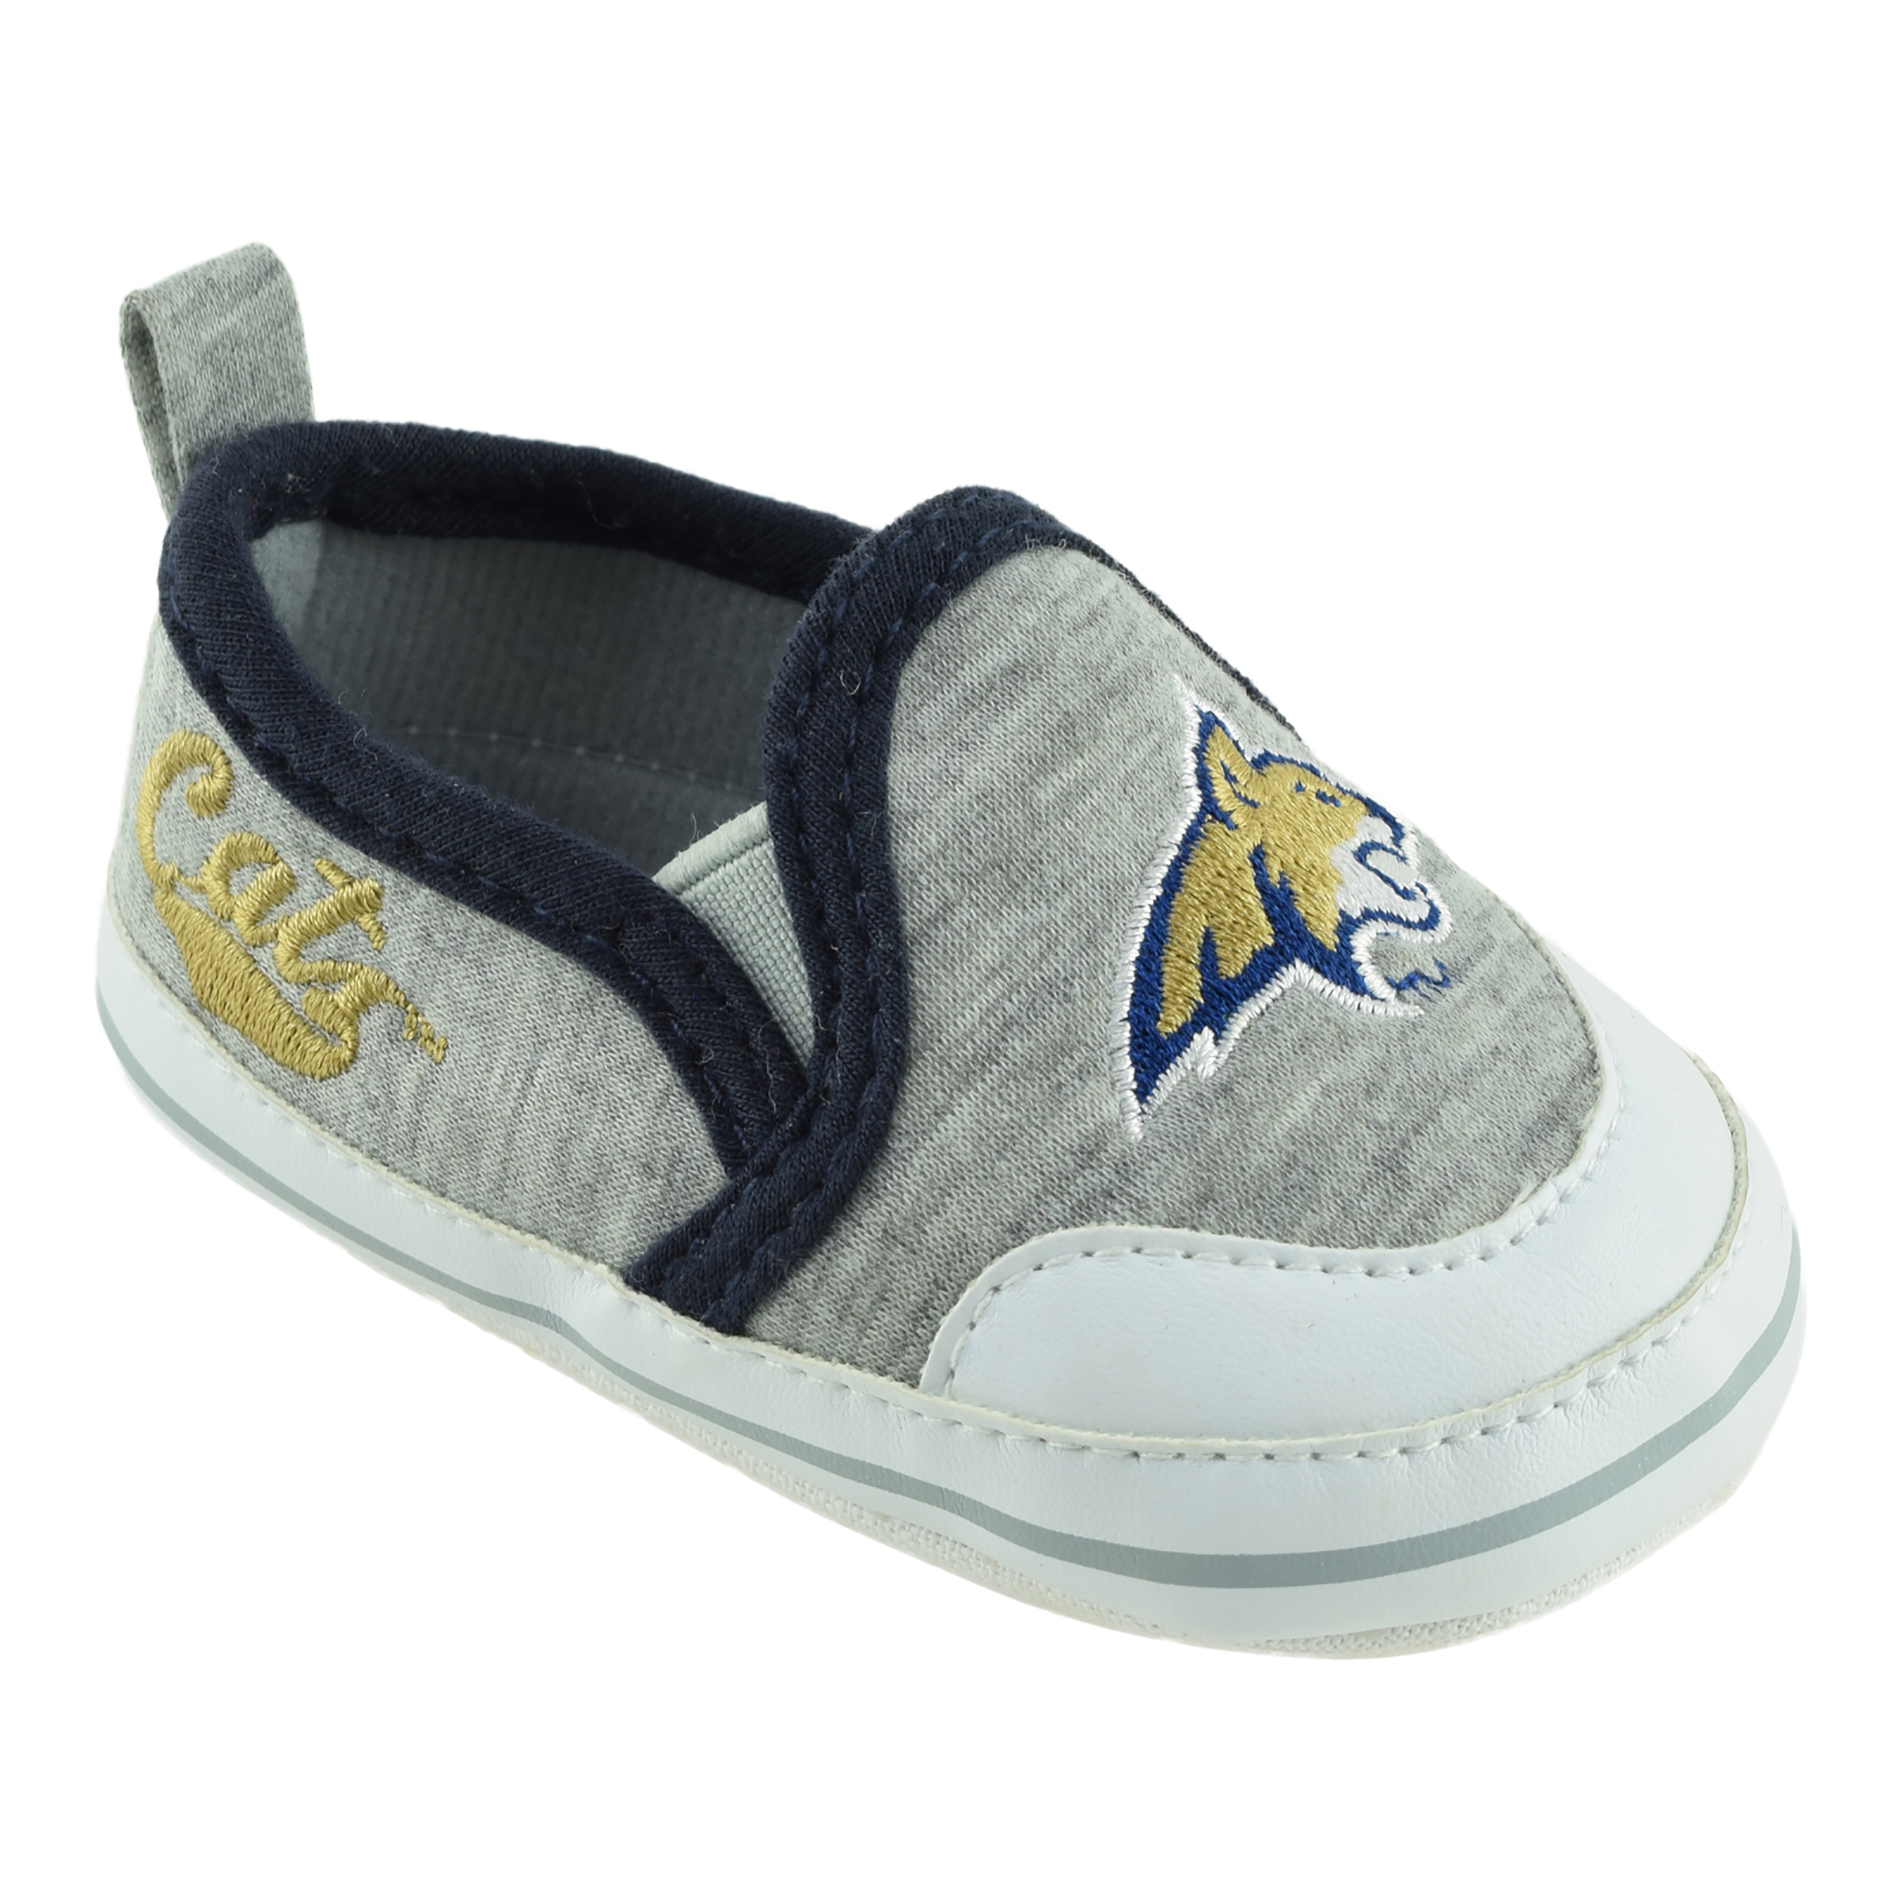 NCAA Infants&#8217; Prewalker Sneakers - Montana State Bobcats